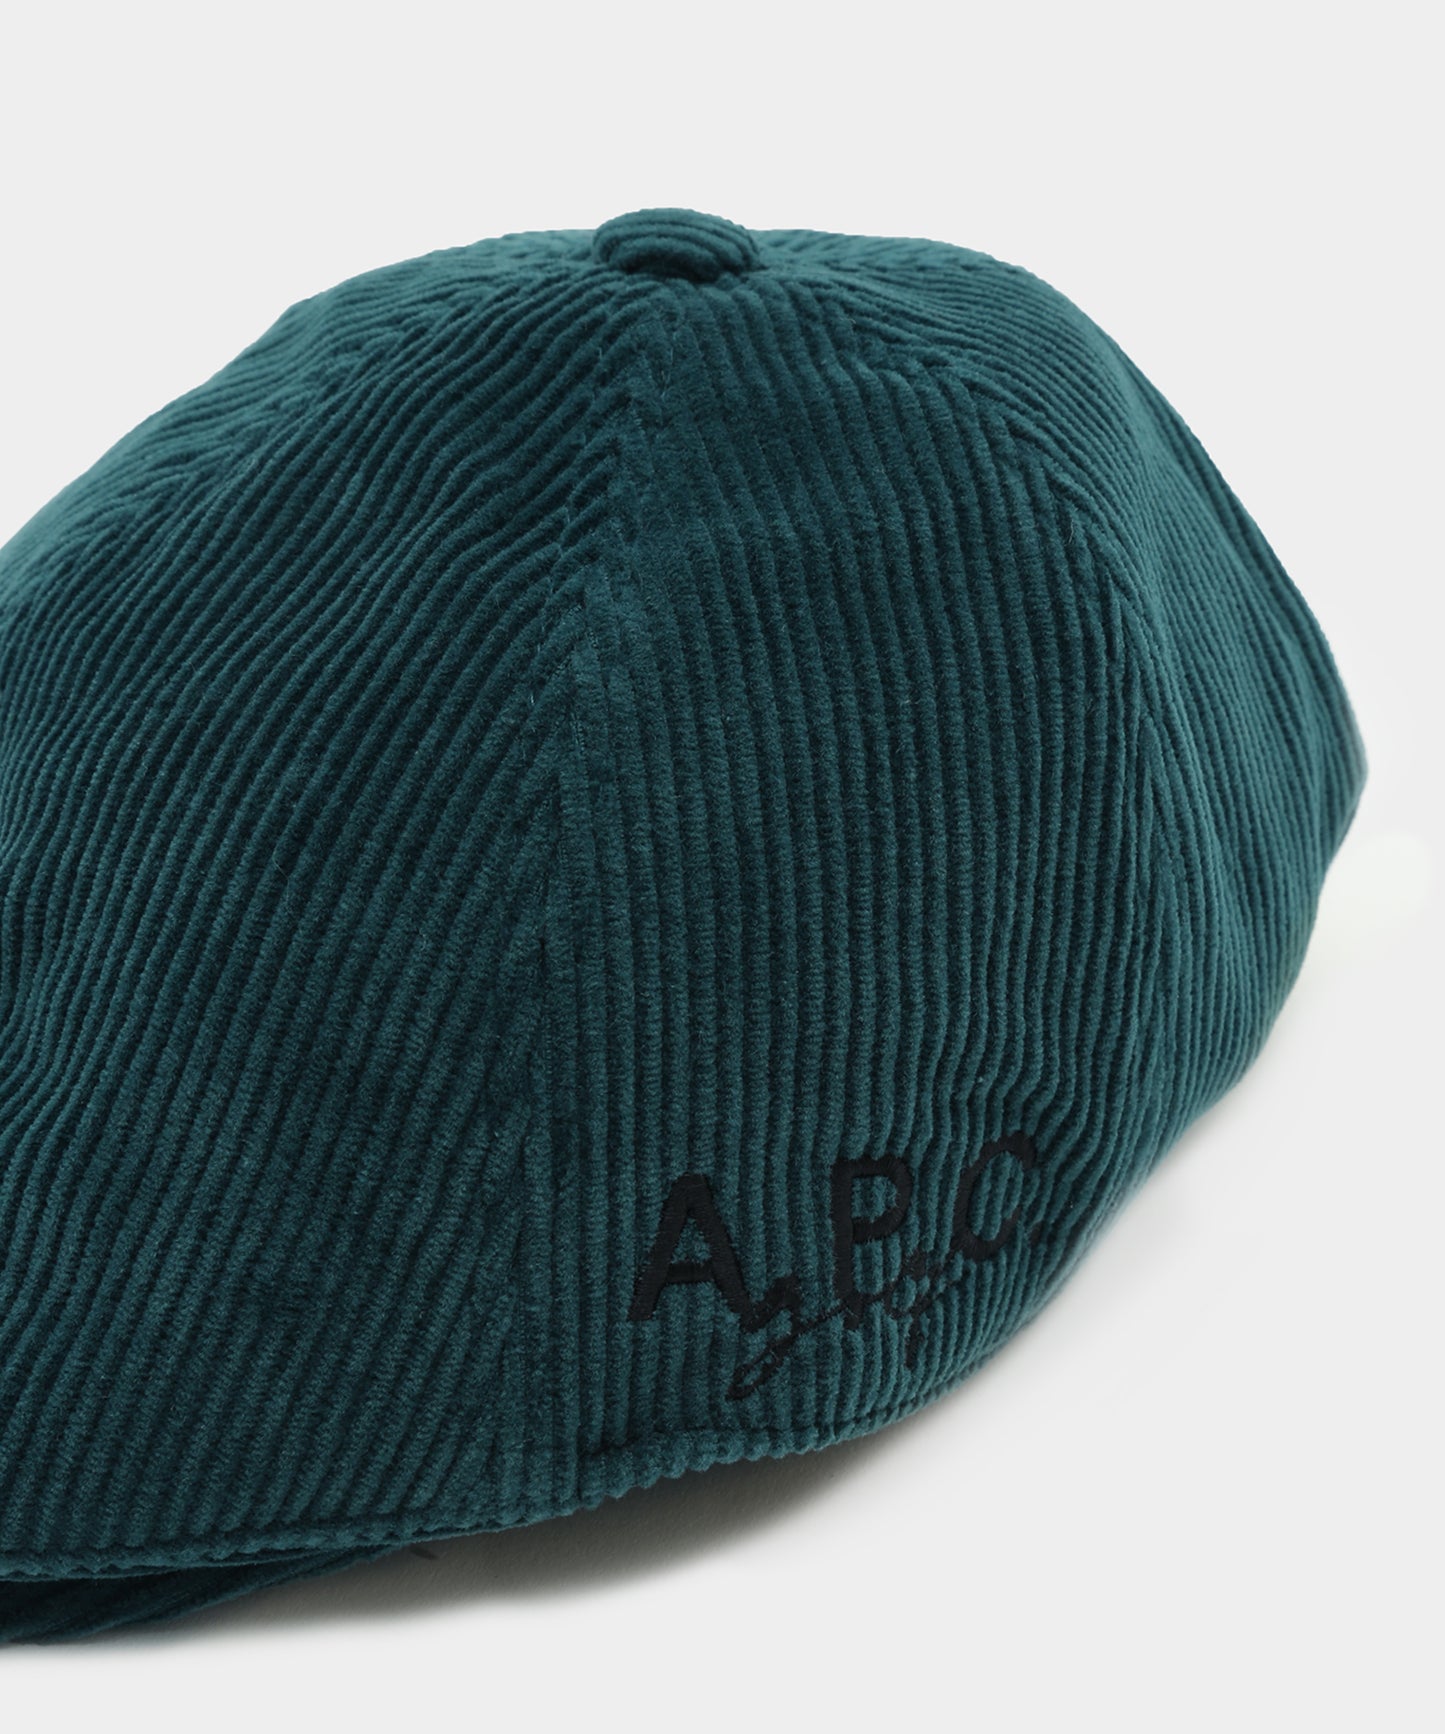 A.P.C.GOLF CAP B.GREEN